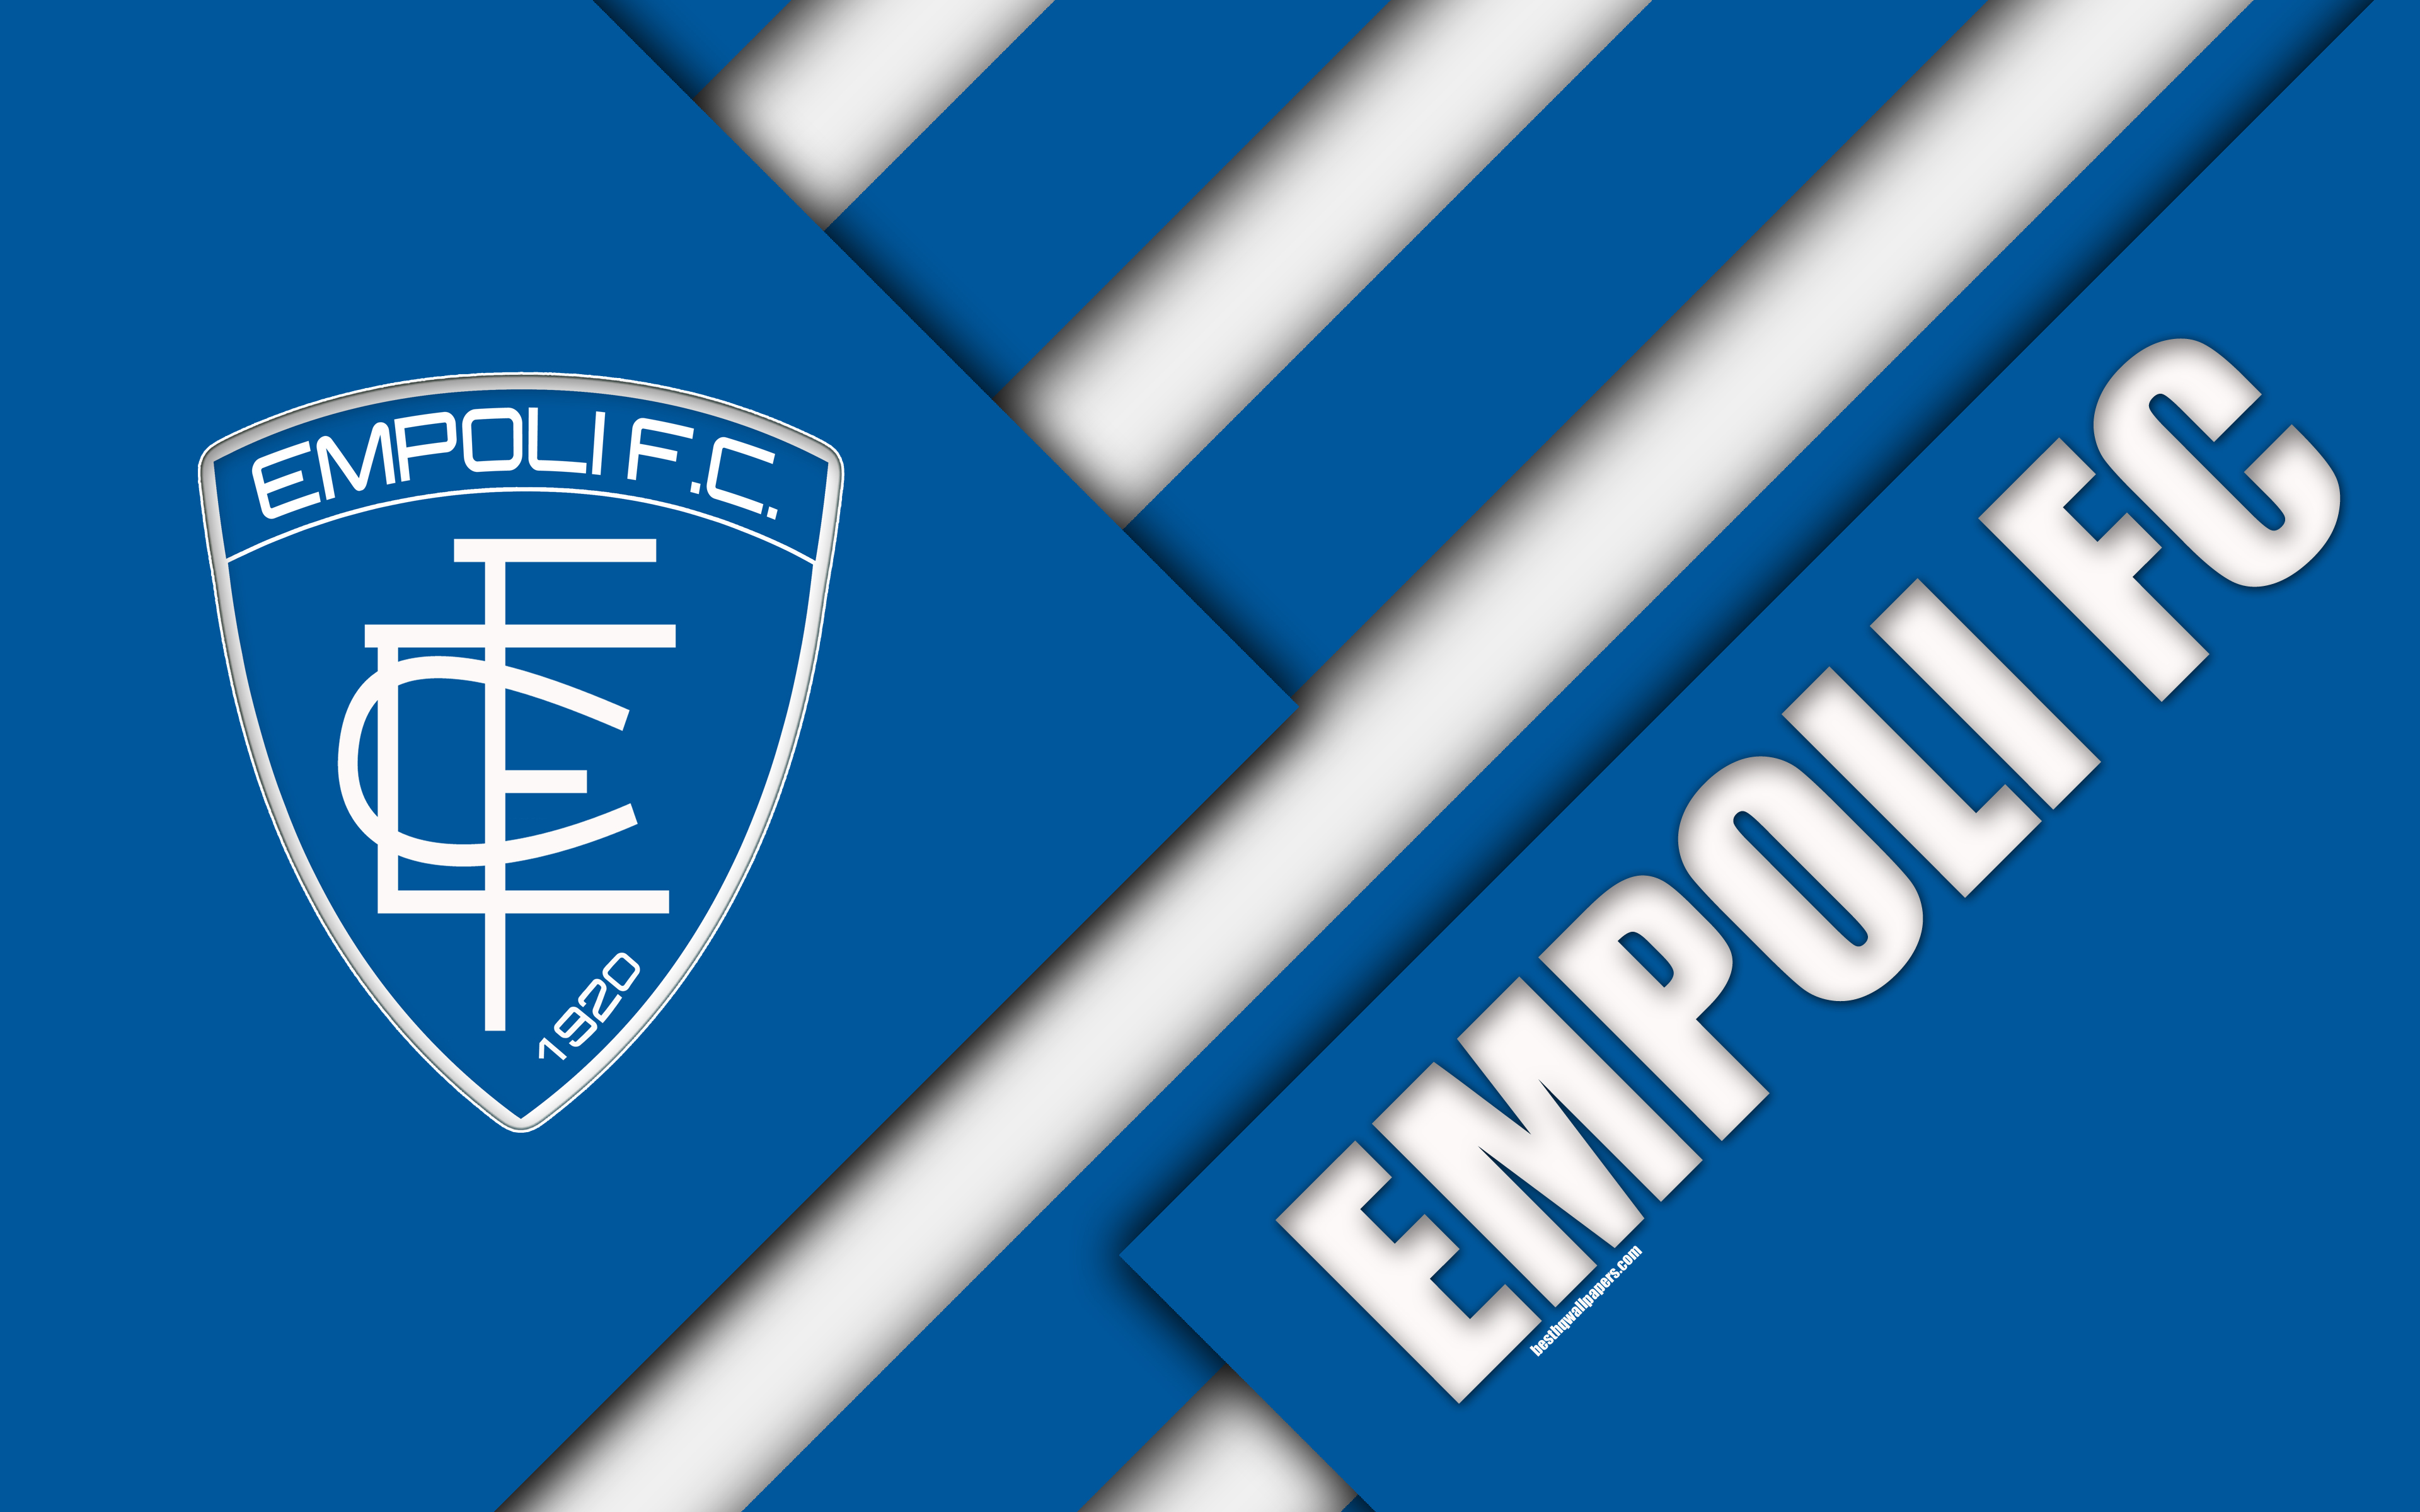 Download wallpaper Empoli FC, 4k, material design, logo, blue white